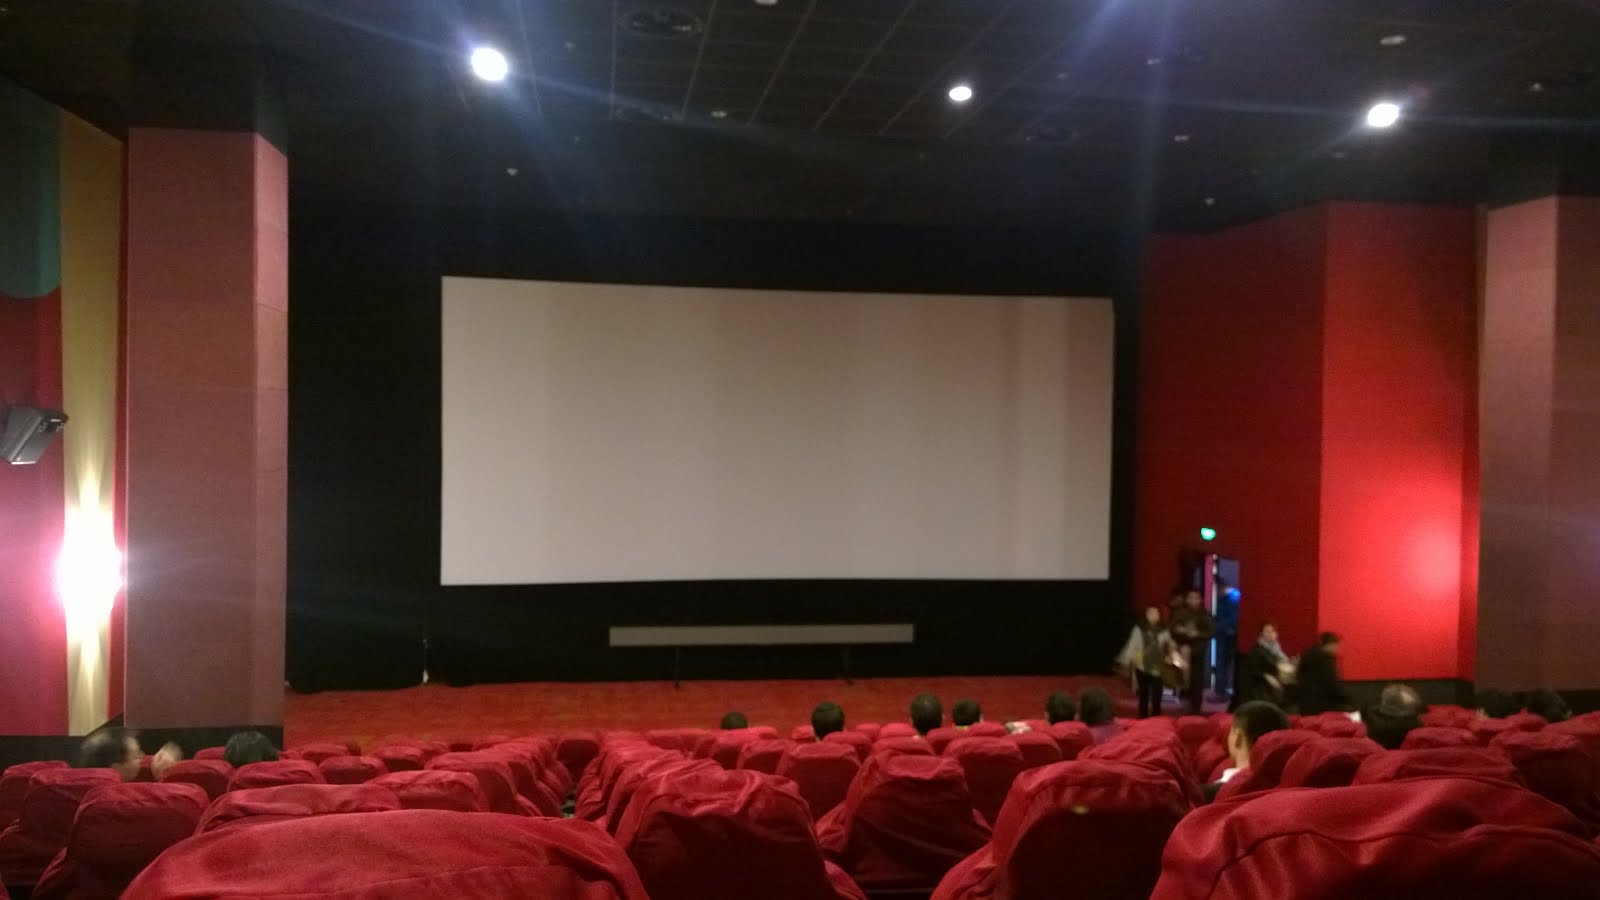 My local Chinese movie theater